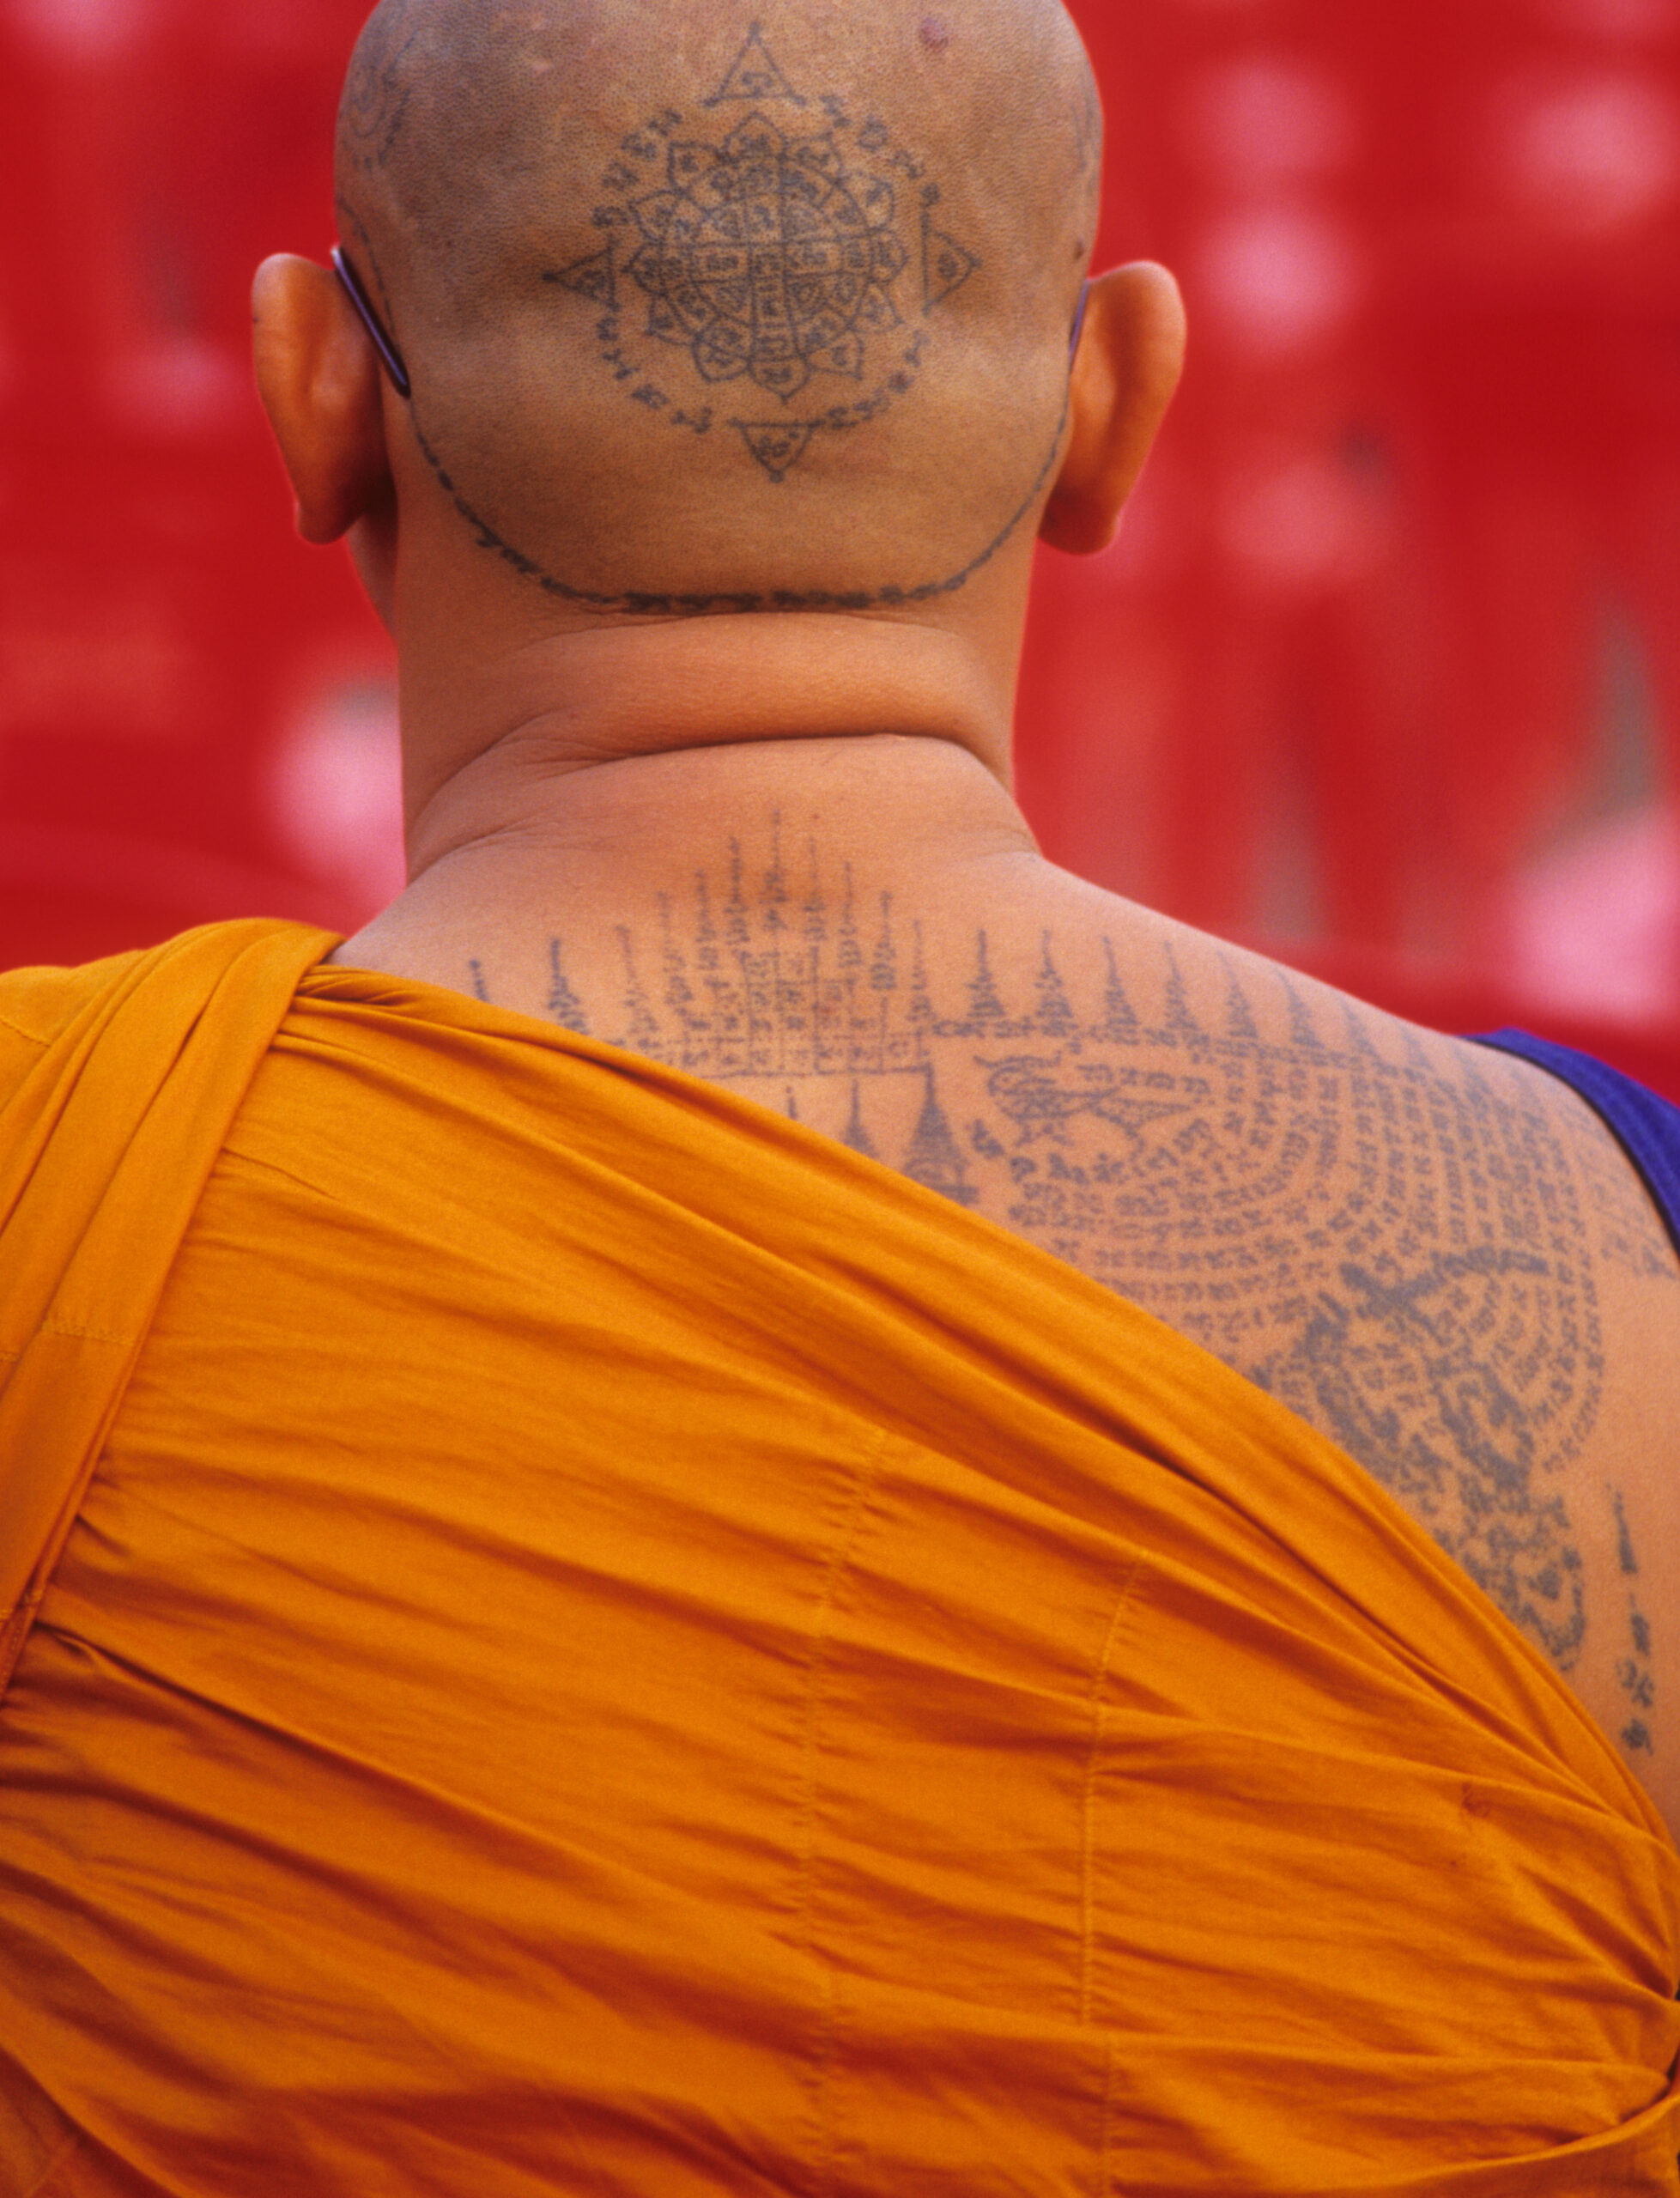 theravada buddhist symbols